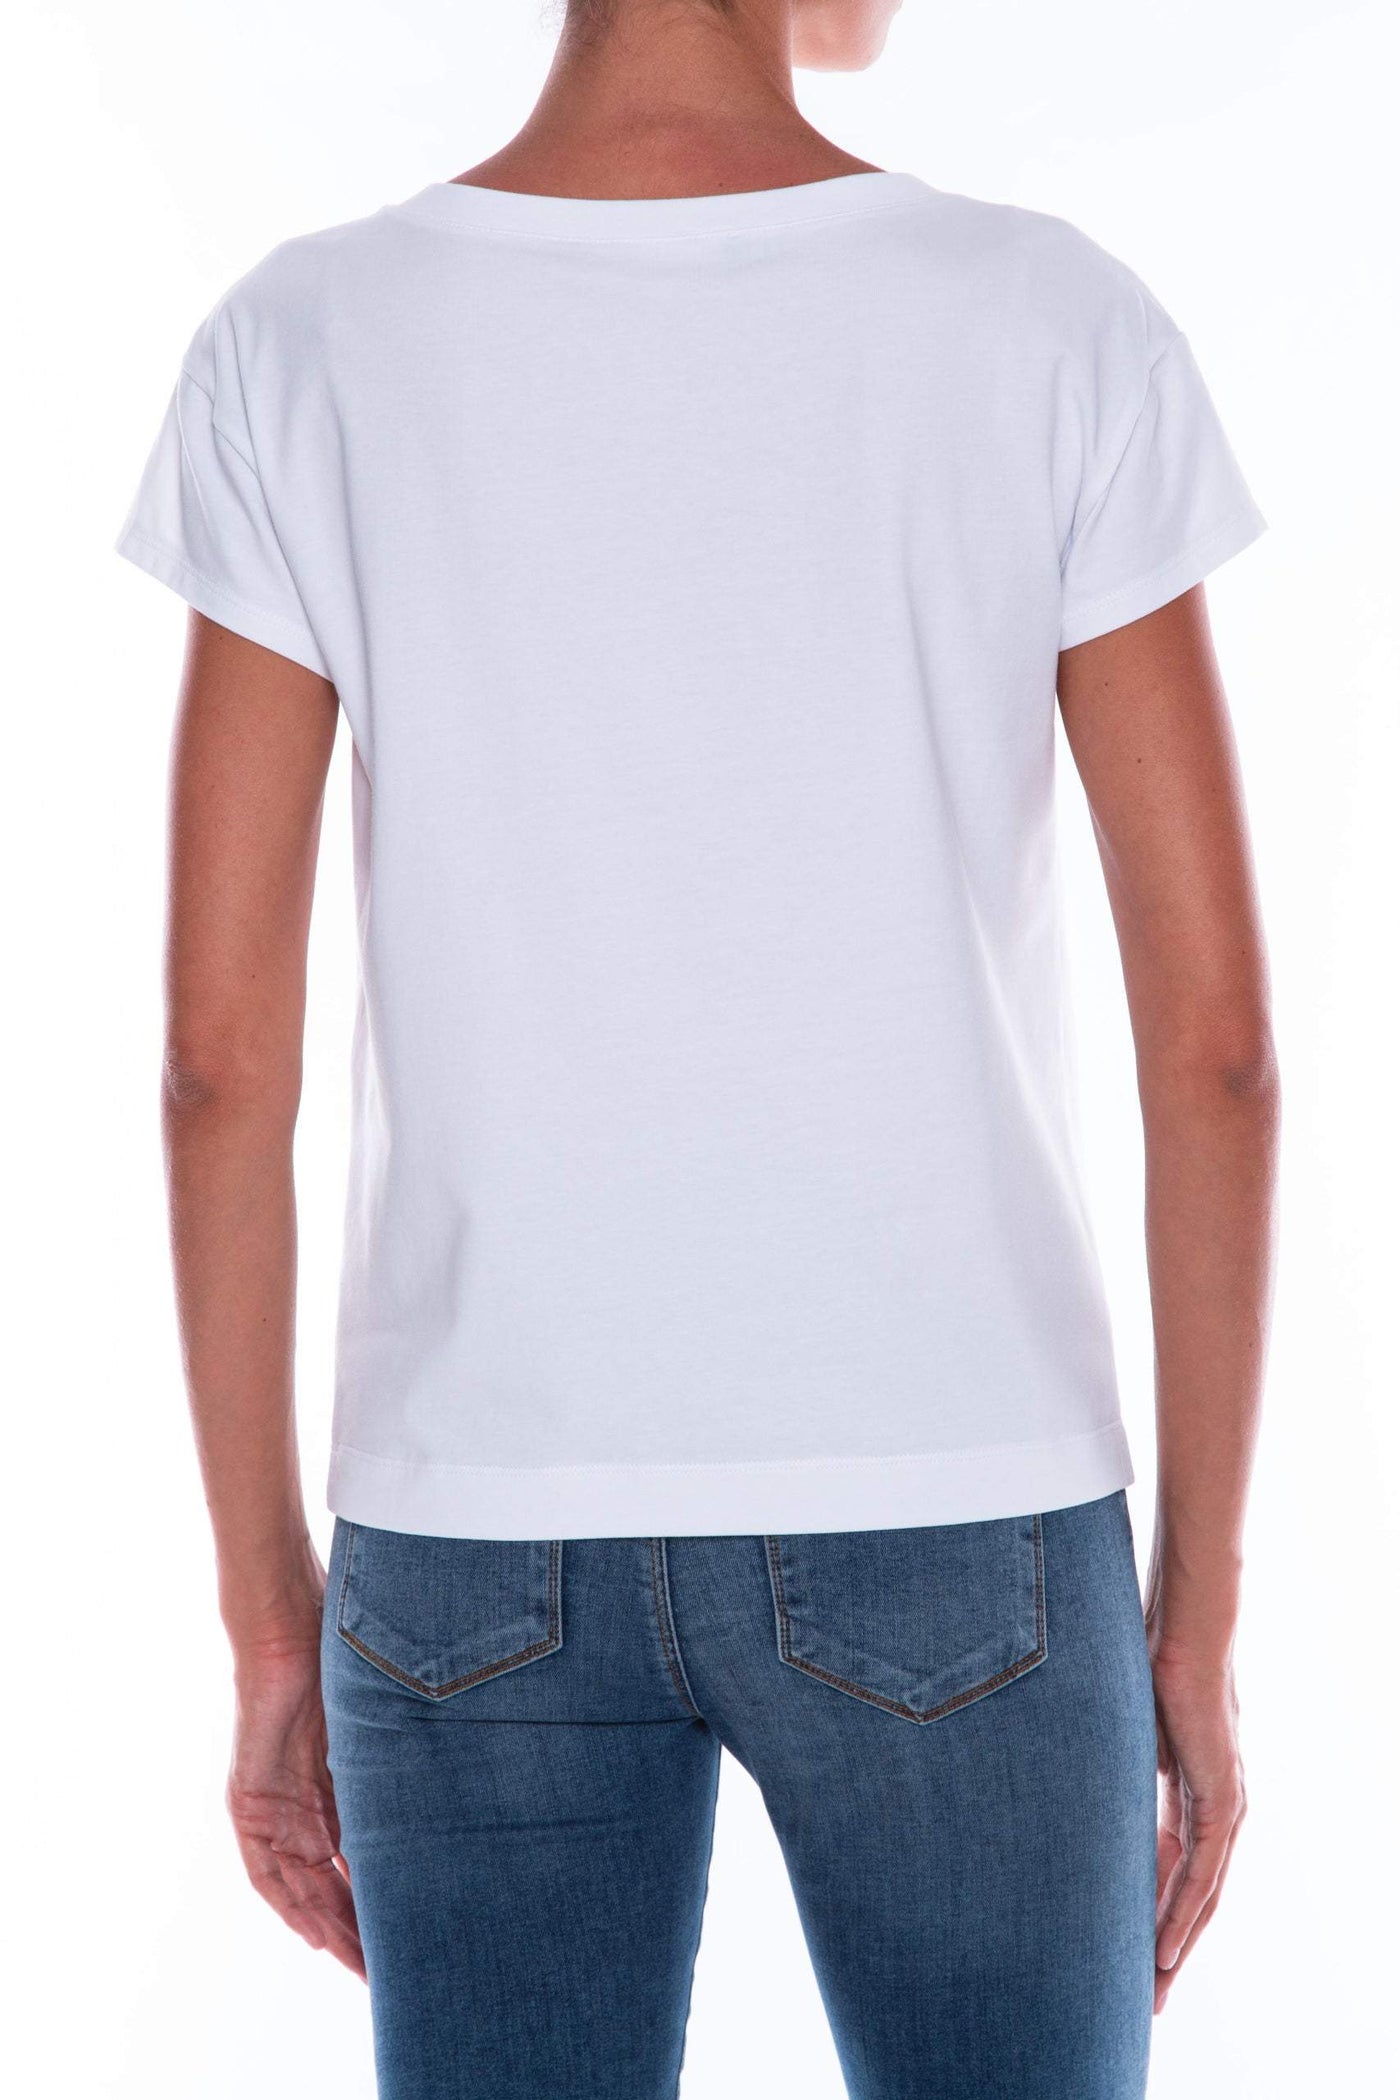 Love Moschino White Cotton Tops & T-Shirt feed-1, IT38|XS, IT40|S, IT42|M, IT44|L, IT46 | L, IT48 | XL, Love Moschino, Tops & T-Shirts - Women - Clothing, White at SEYMAYKA